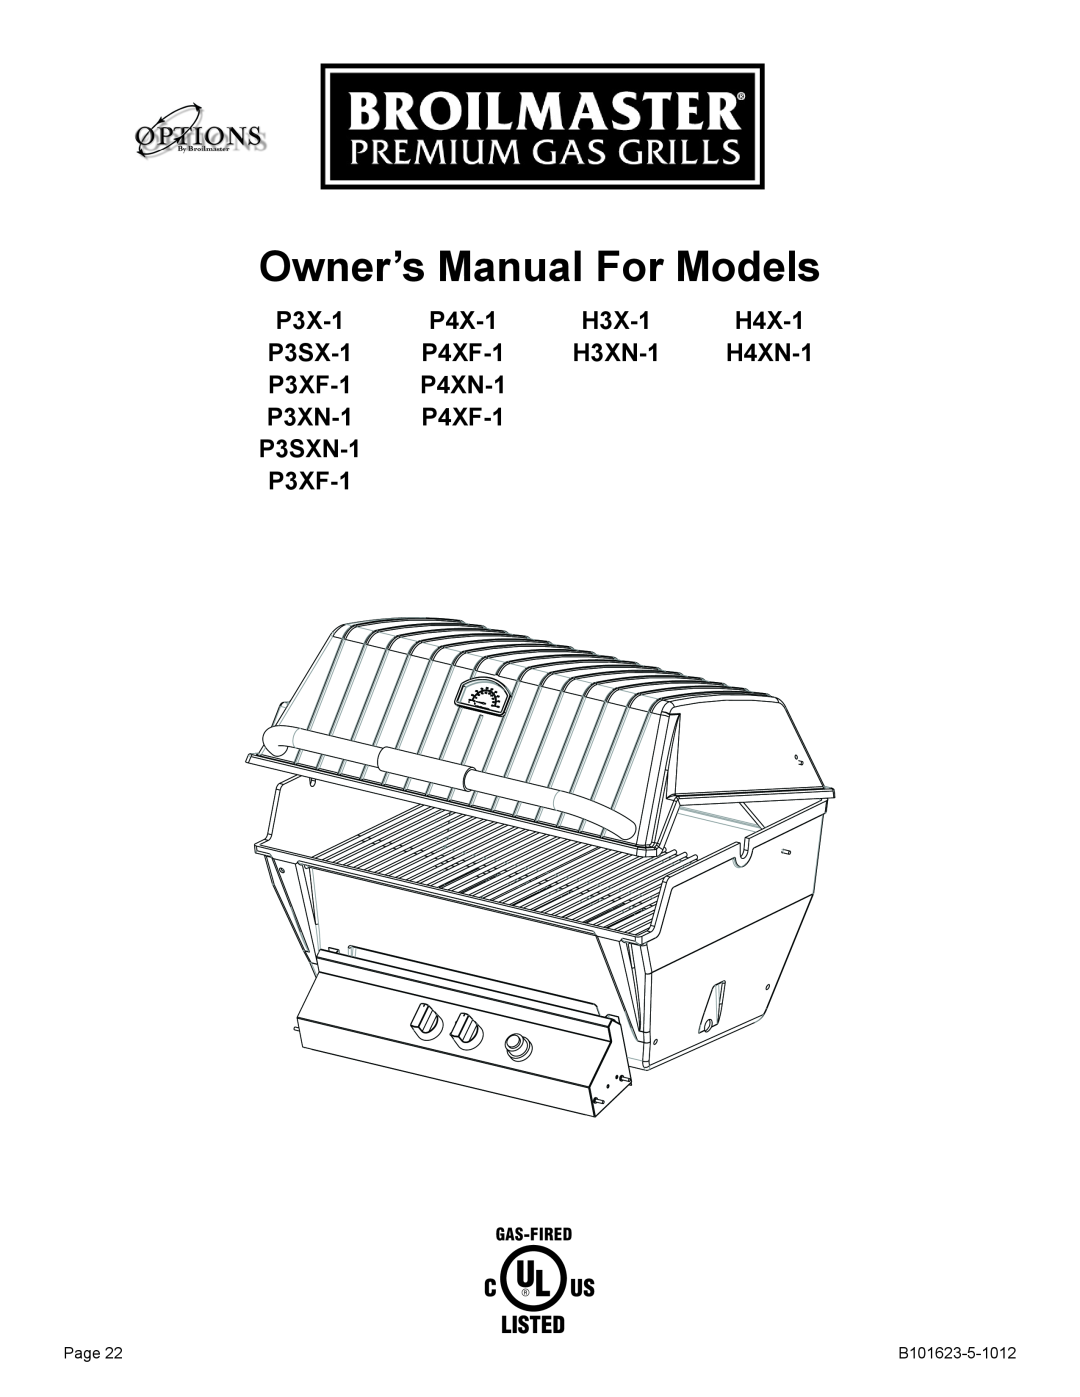 Broilmaster P3XFN-1 Owner’s Manual For Models, H4XN-1, P3X-1, P4X-1, H3X-1, H4X-1, P3SX-1, P4XF-1, H3XN-1, P3XF-1, P4XN-1 